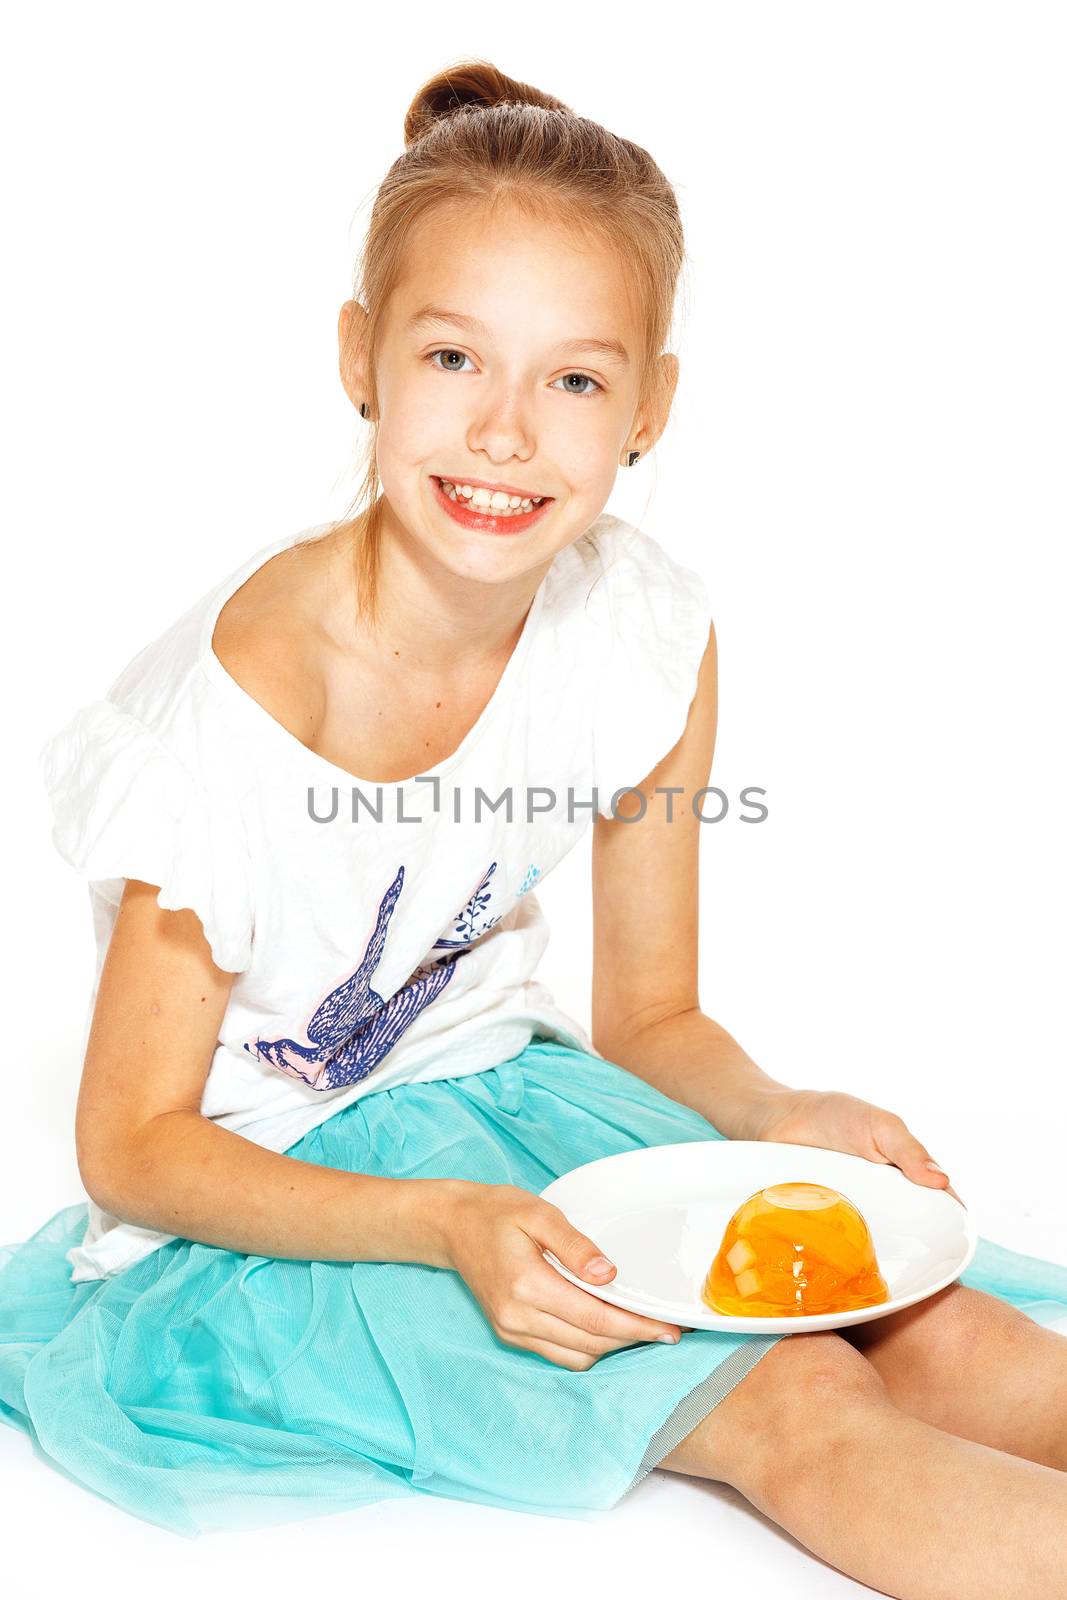 Little girl eating jello by gorov108